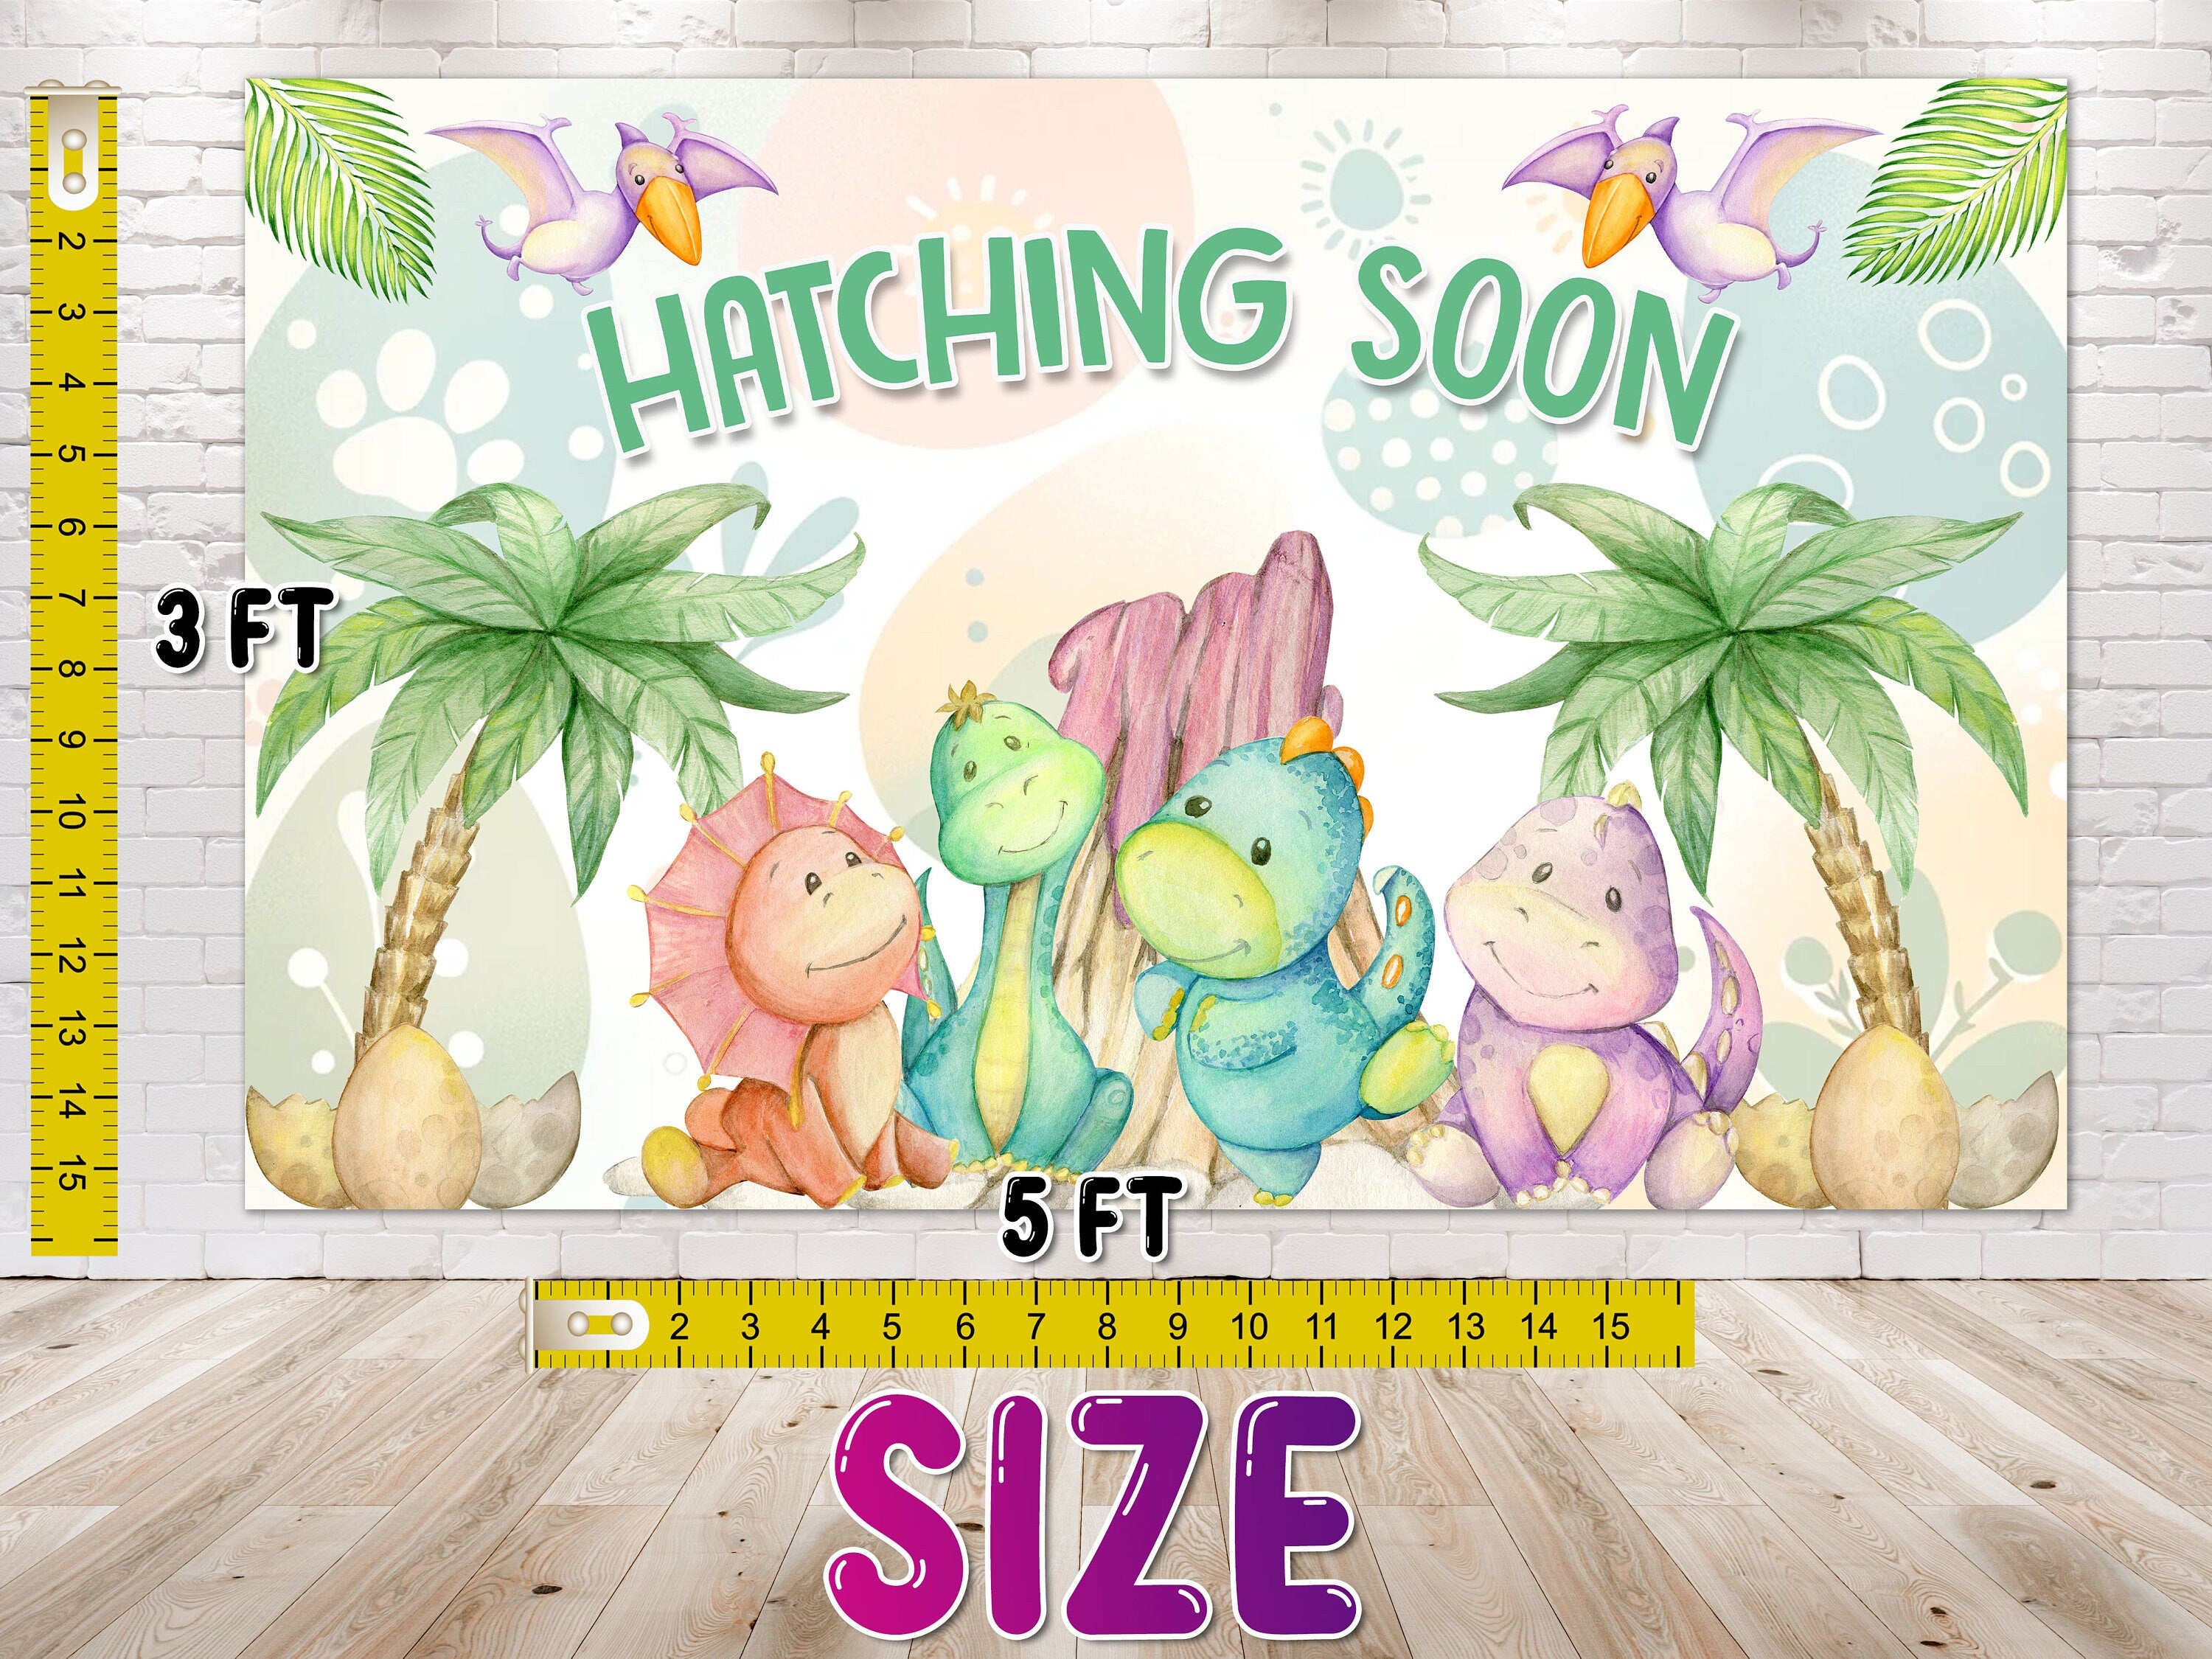 "Hatching Soon" Dinosaur Baby Shower Backdrop 5x3 FT - Prehistoric Celebration Decor